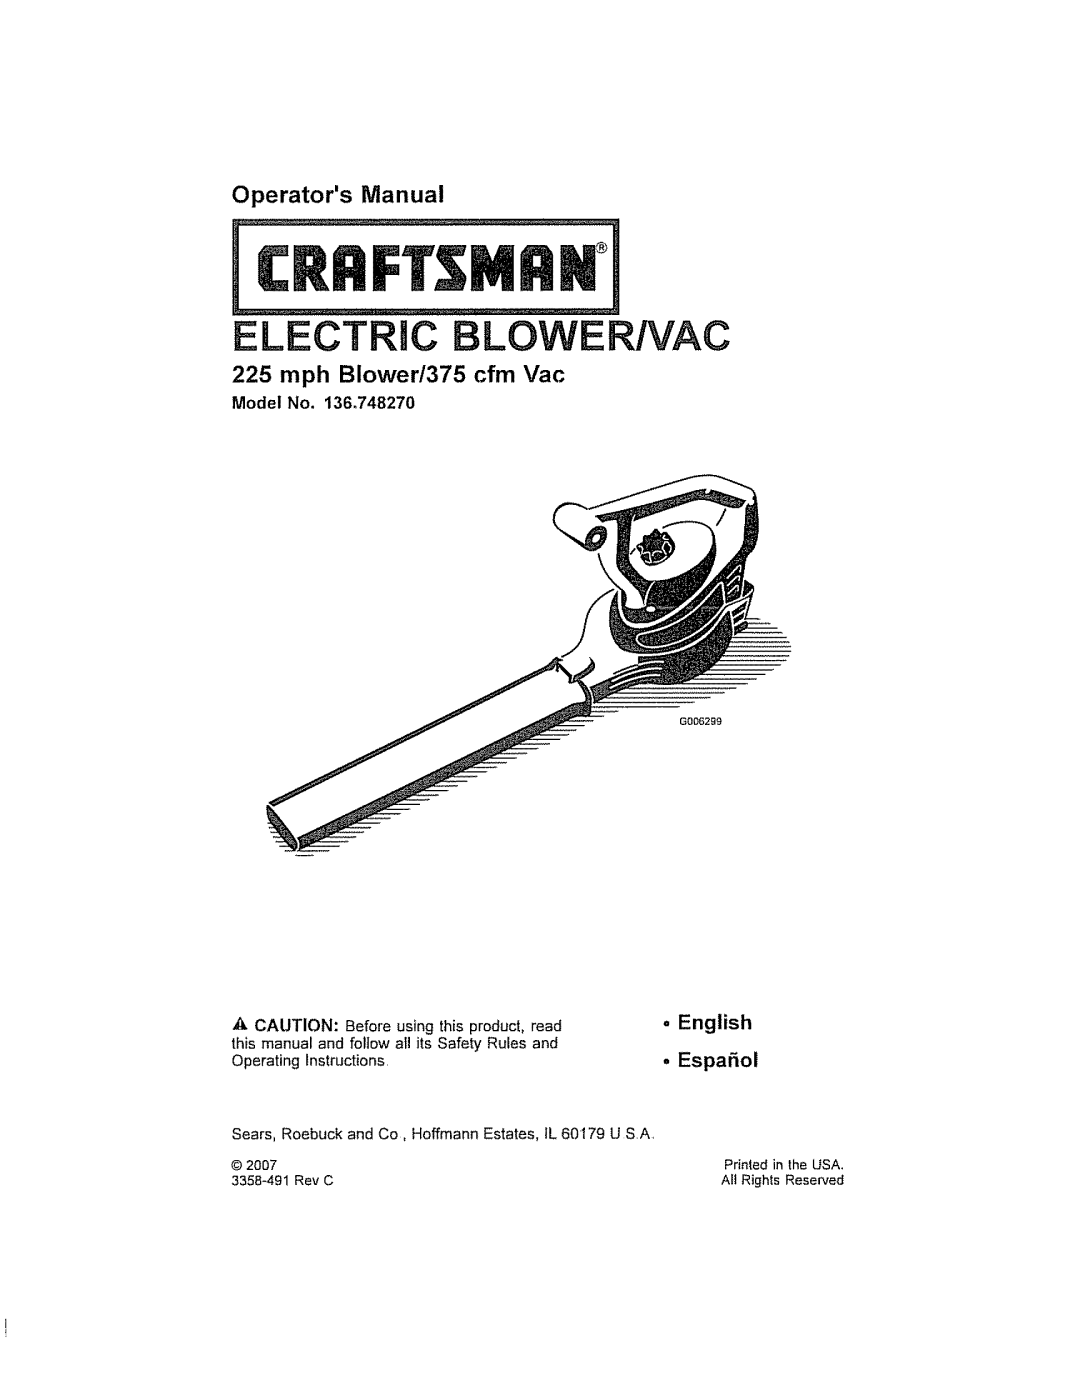 Craftsman 280030785 manual mph Blower/375 cfm Vac, English, EspaSol, Crrftsmrn, Electric Lower/Vac, Operators Manual, 2007 